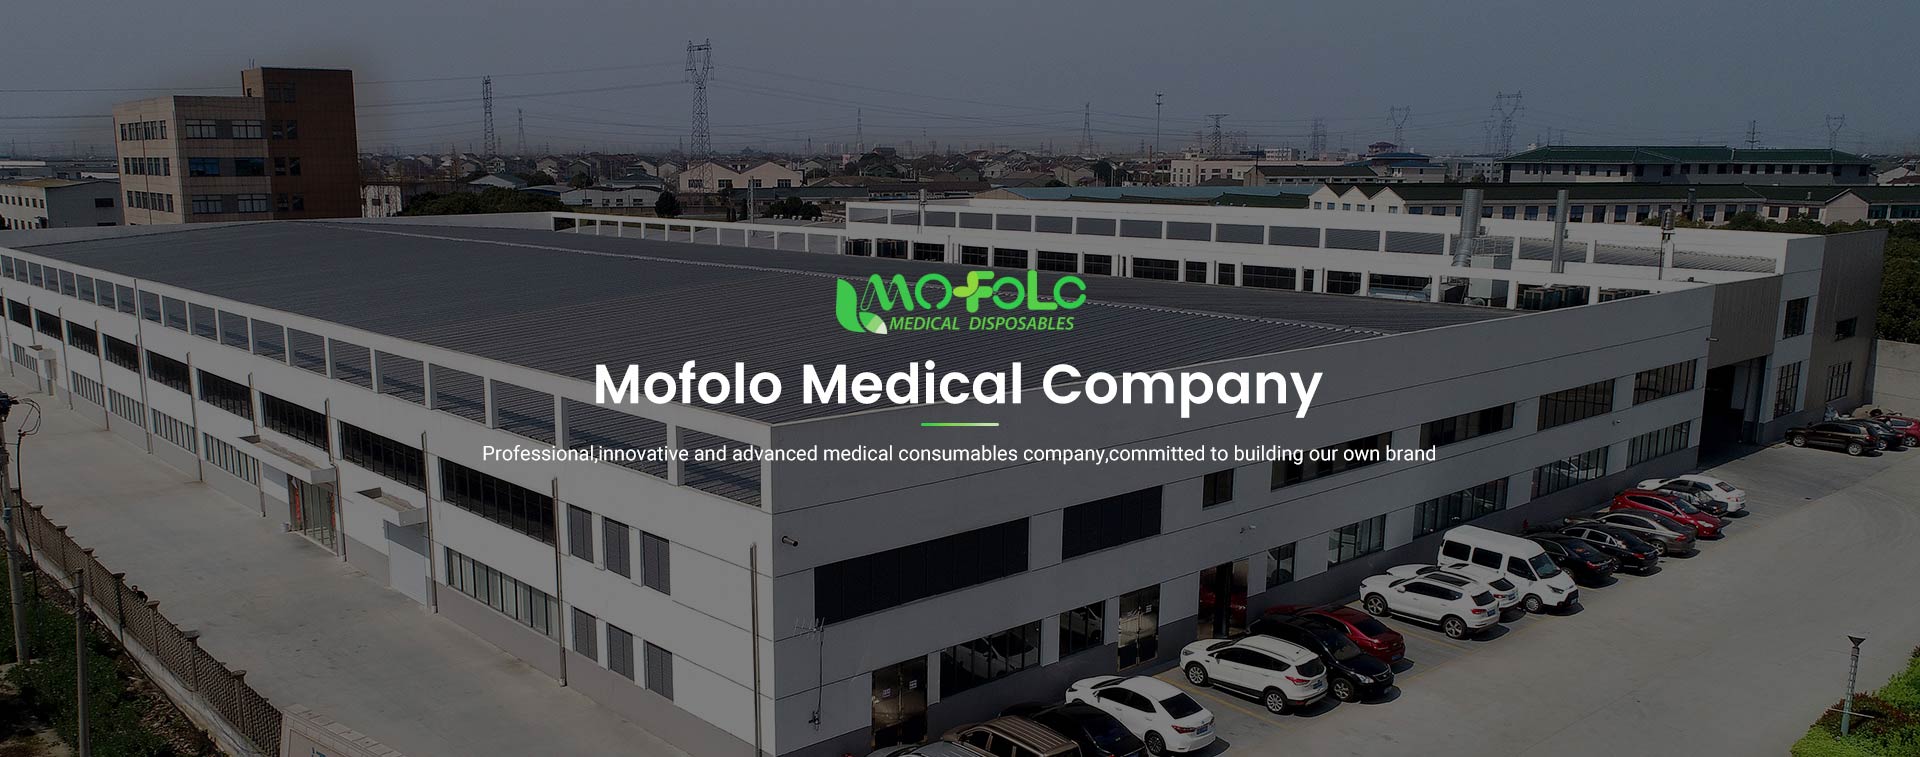 Mofolo Medical company